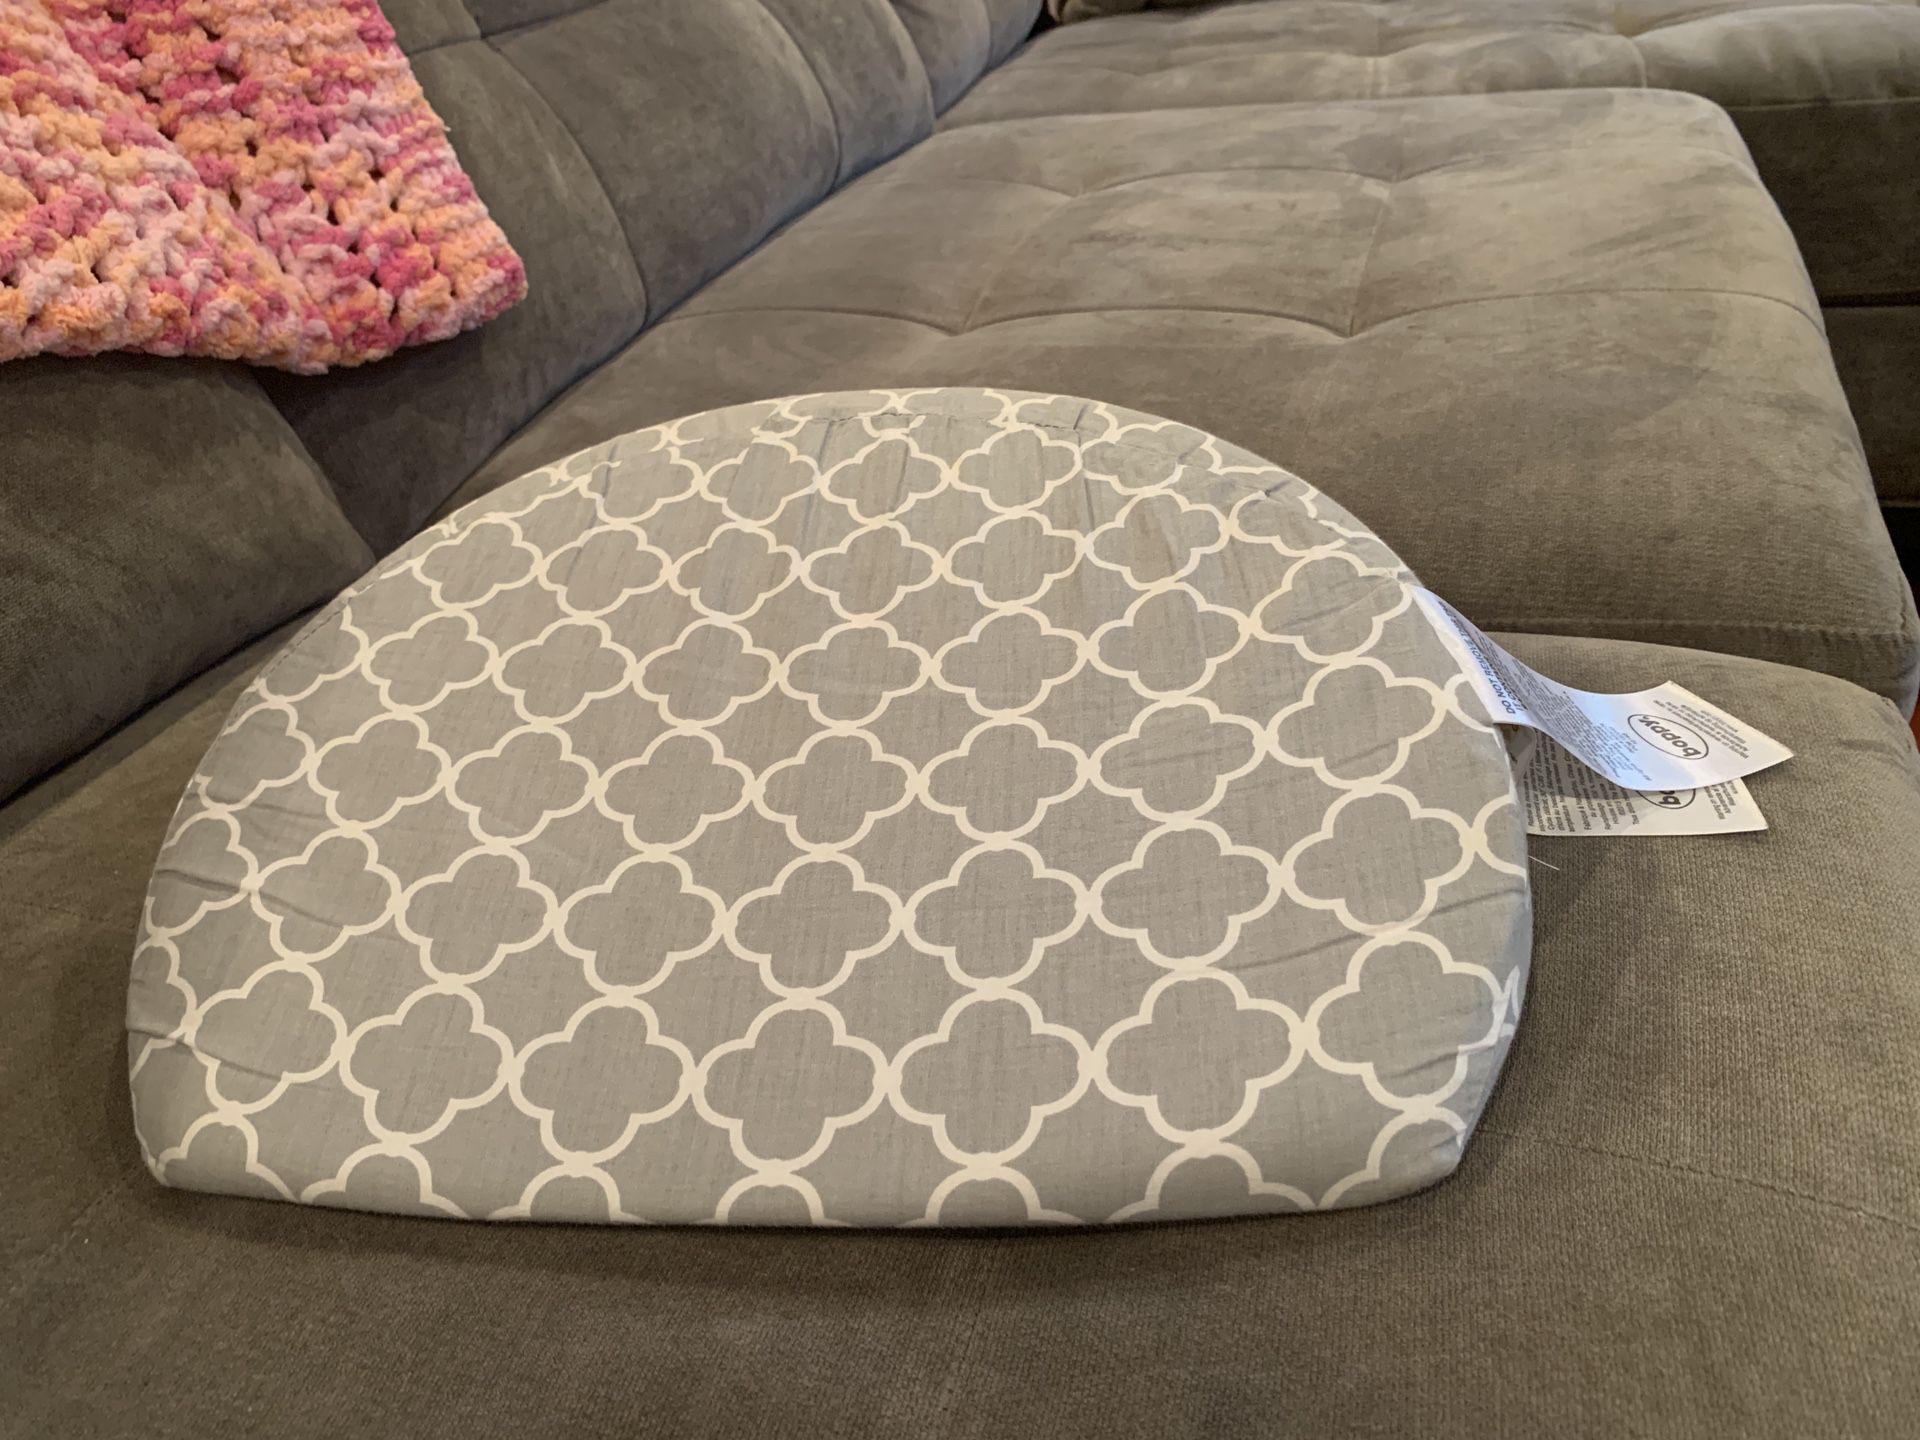 Boppy pregnancy cushion